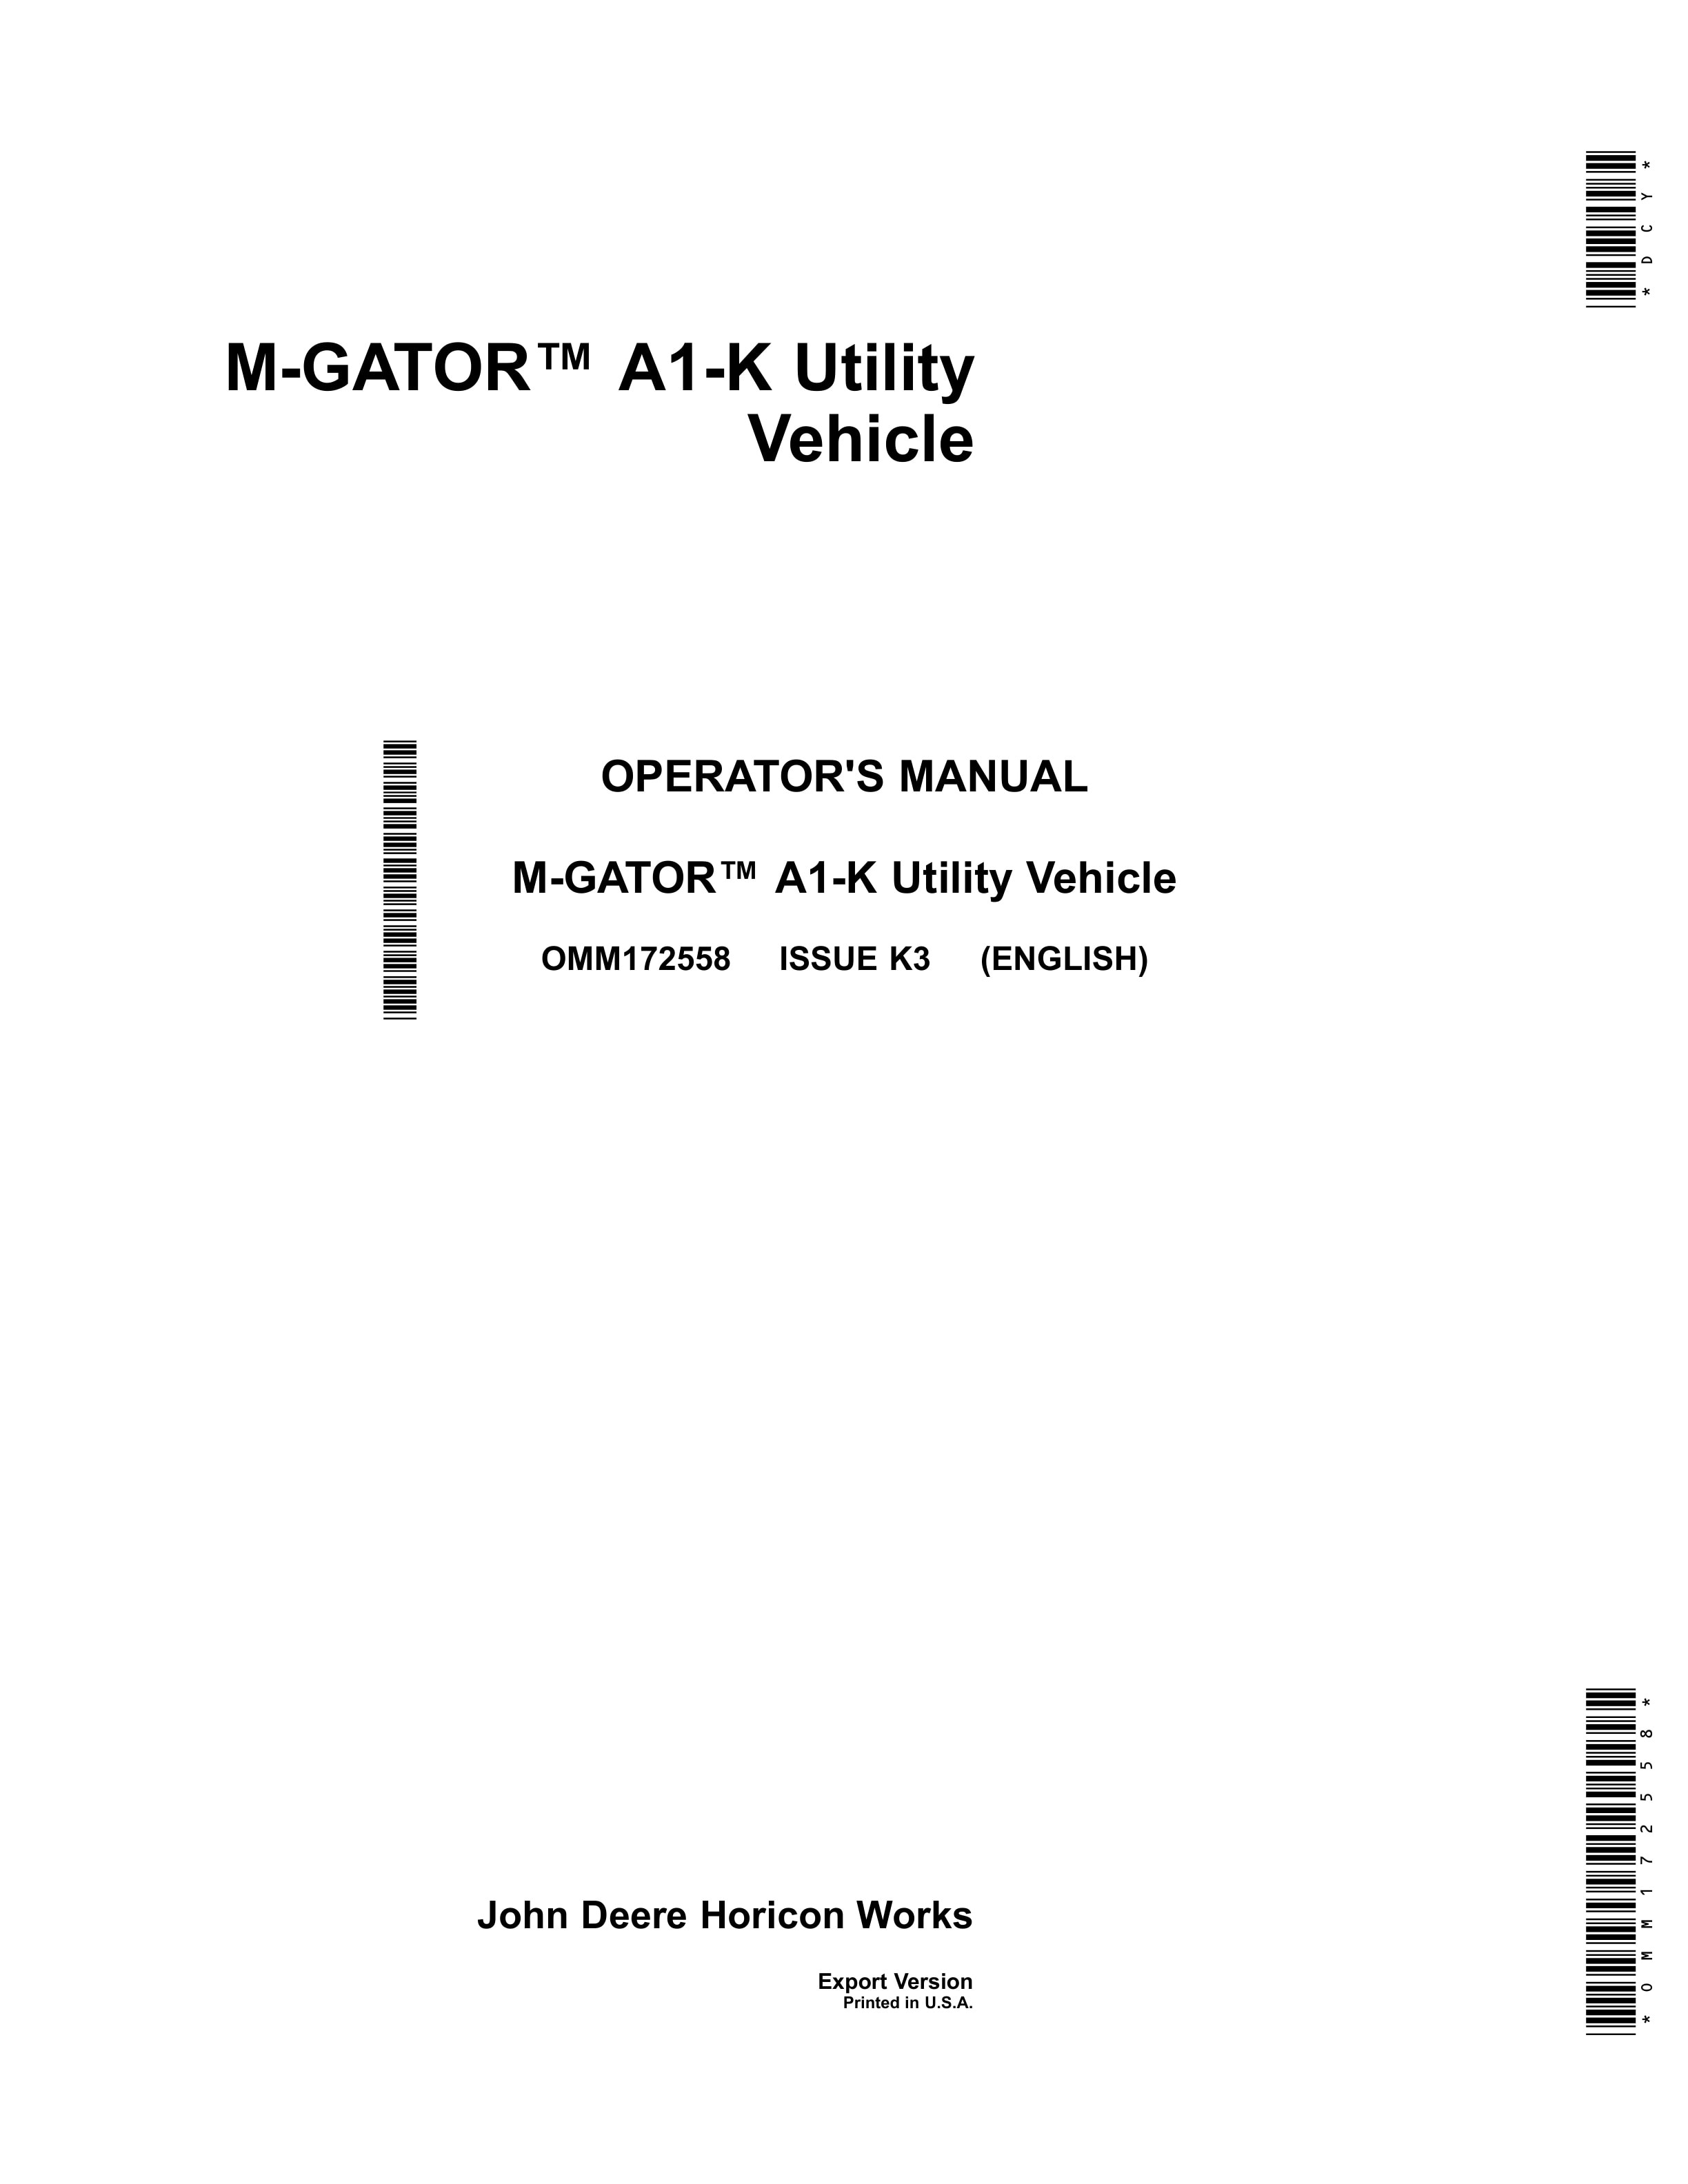 John Deere A1 K M GATOR Utility Vehicles Operator Manual OMM172558 1